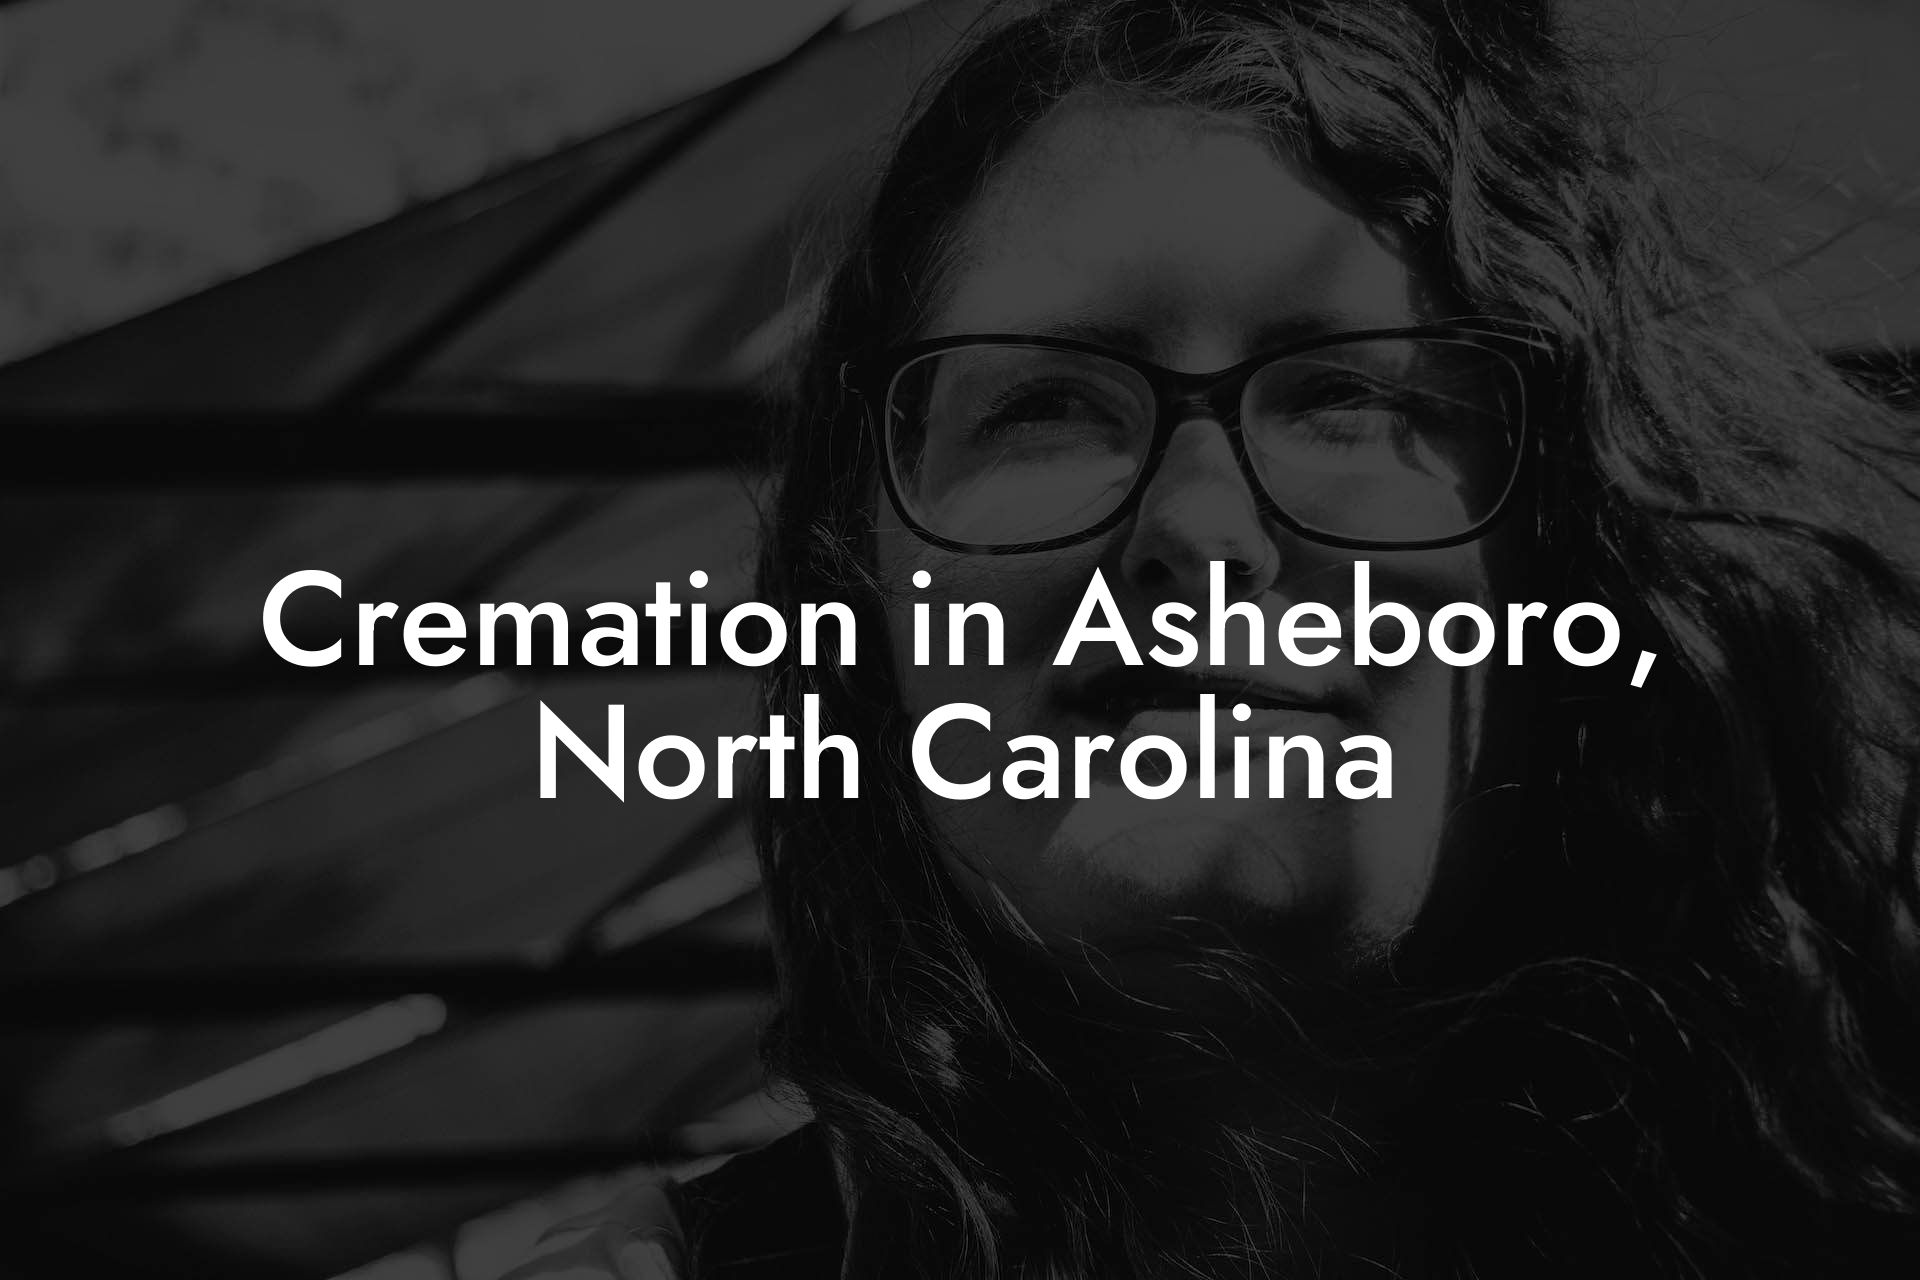 Cremation in Asheboro, North Carolina